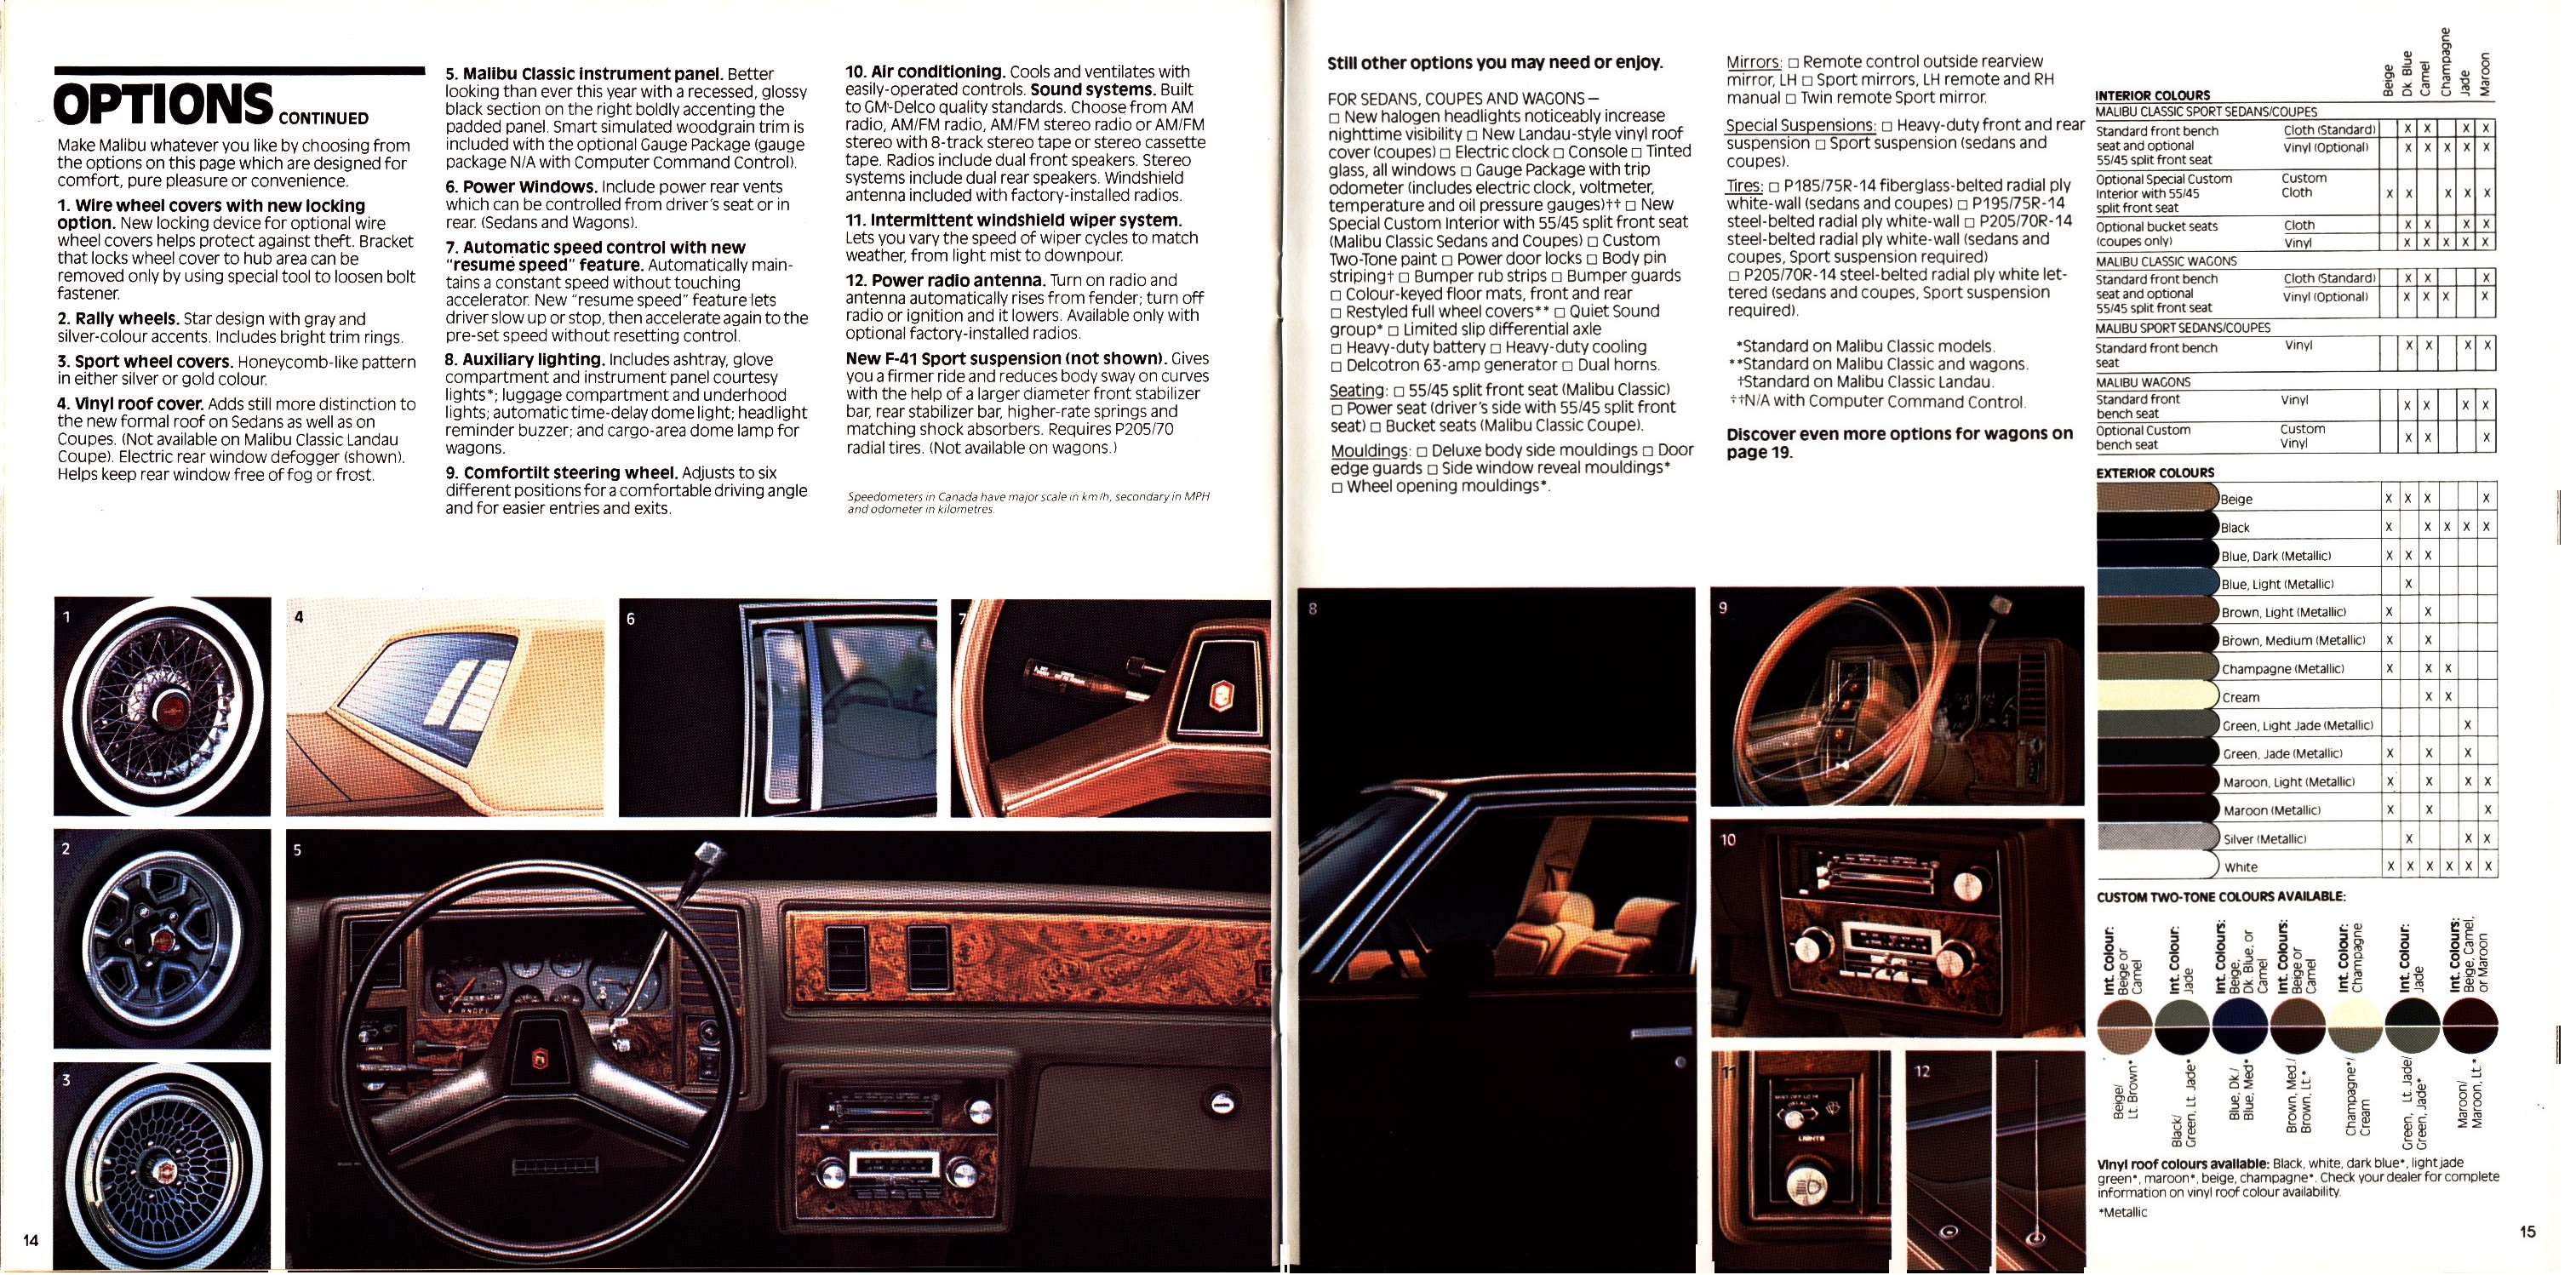 1981 Chevrolet Malibu Brochure (Cdn) 14-15